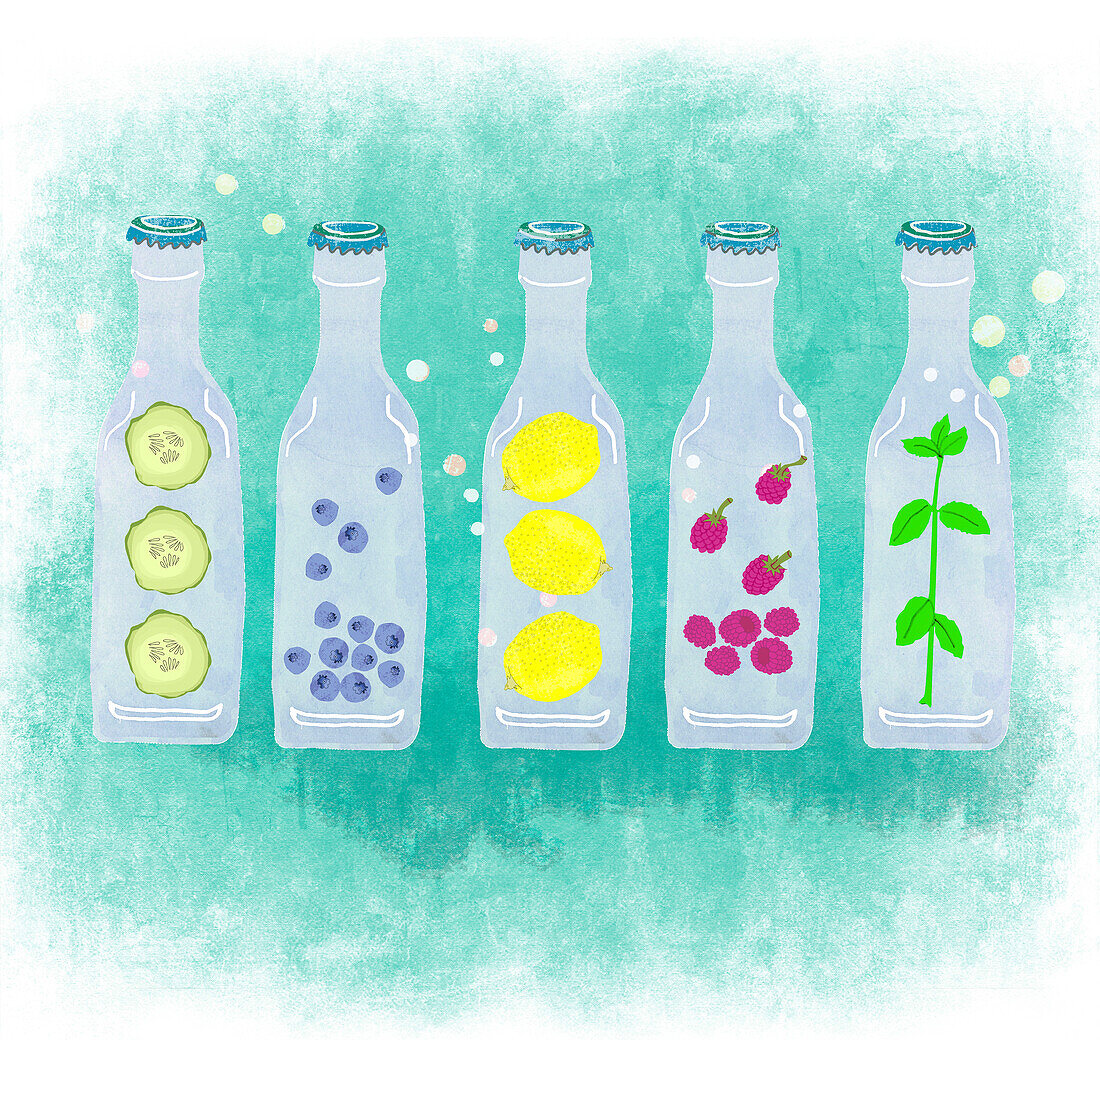 Natural drinks, illustration